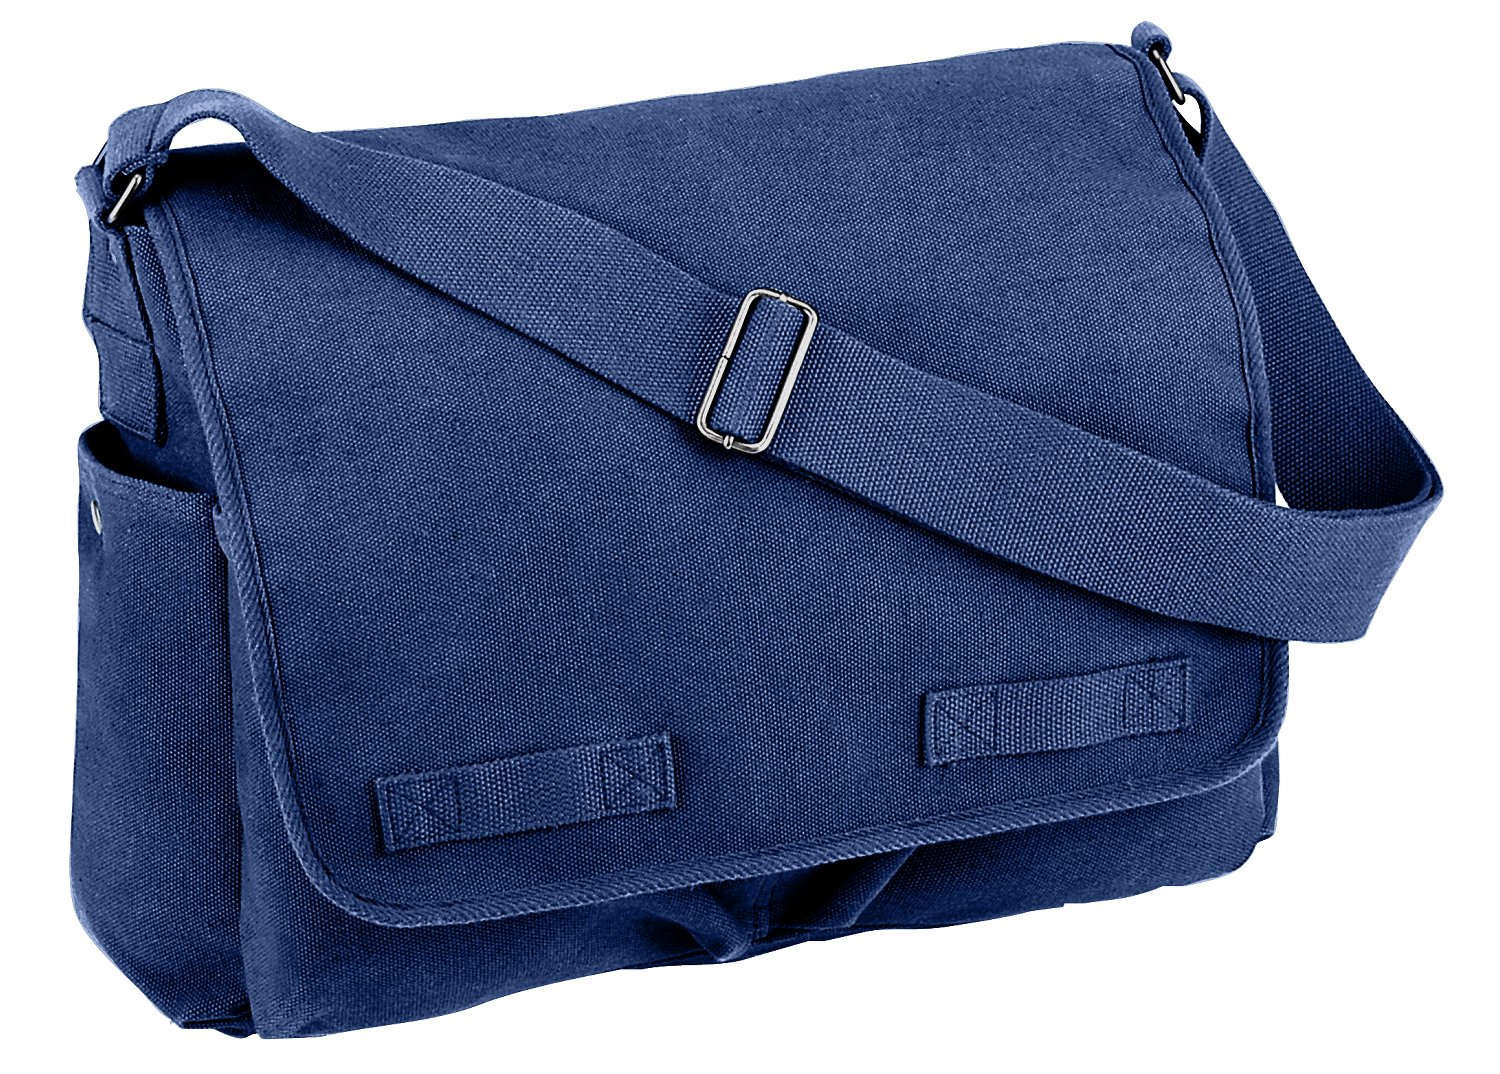 Rothco Classic Canvas Messenger Bag, Blue - image 1 of 3